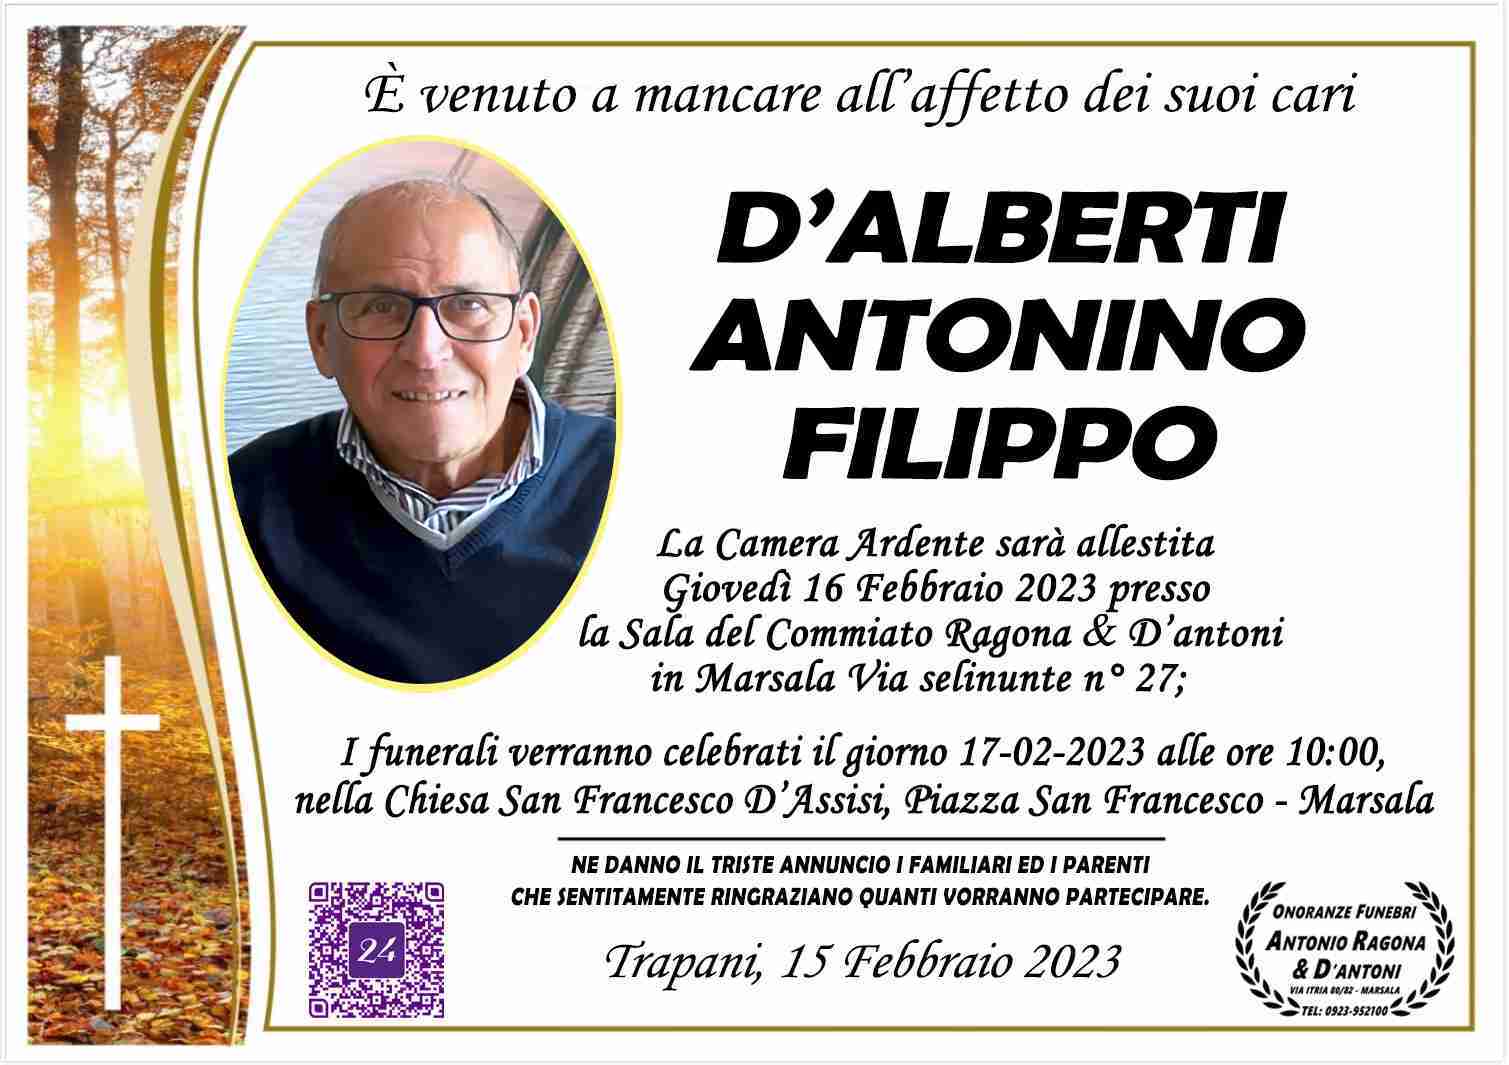 Antonino Filippo D'Alberti